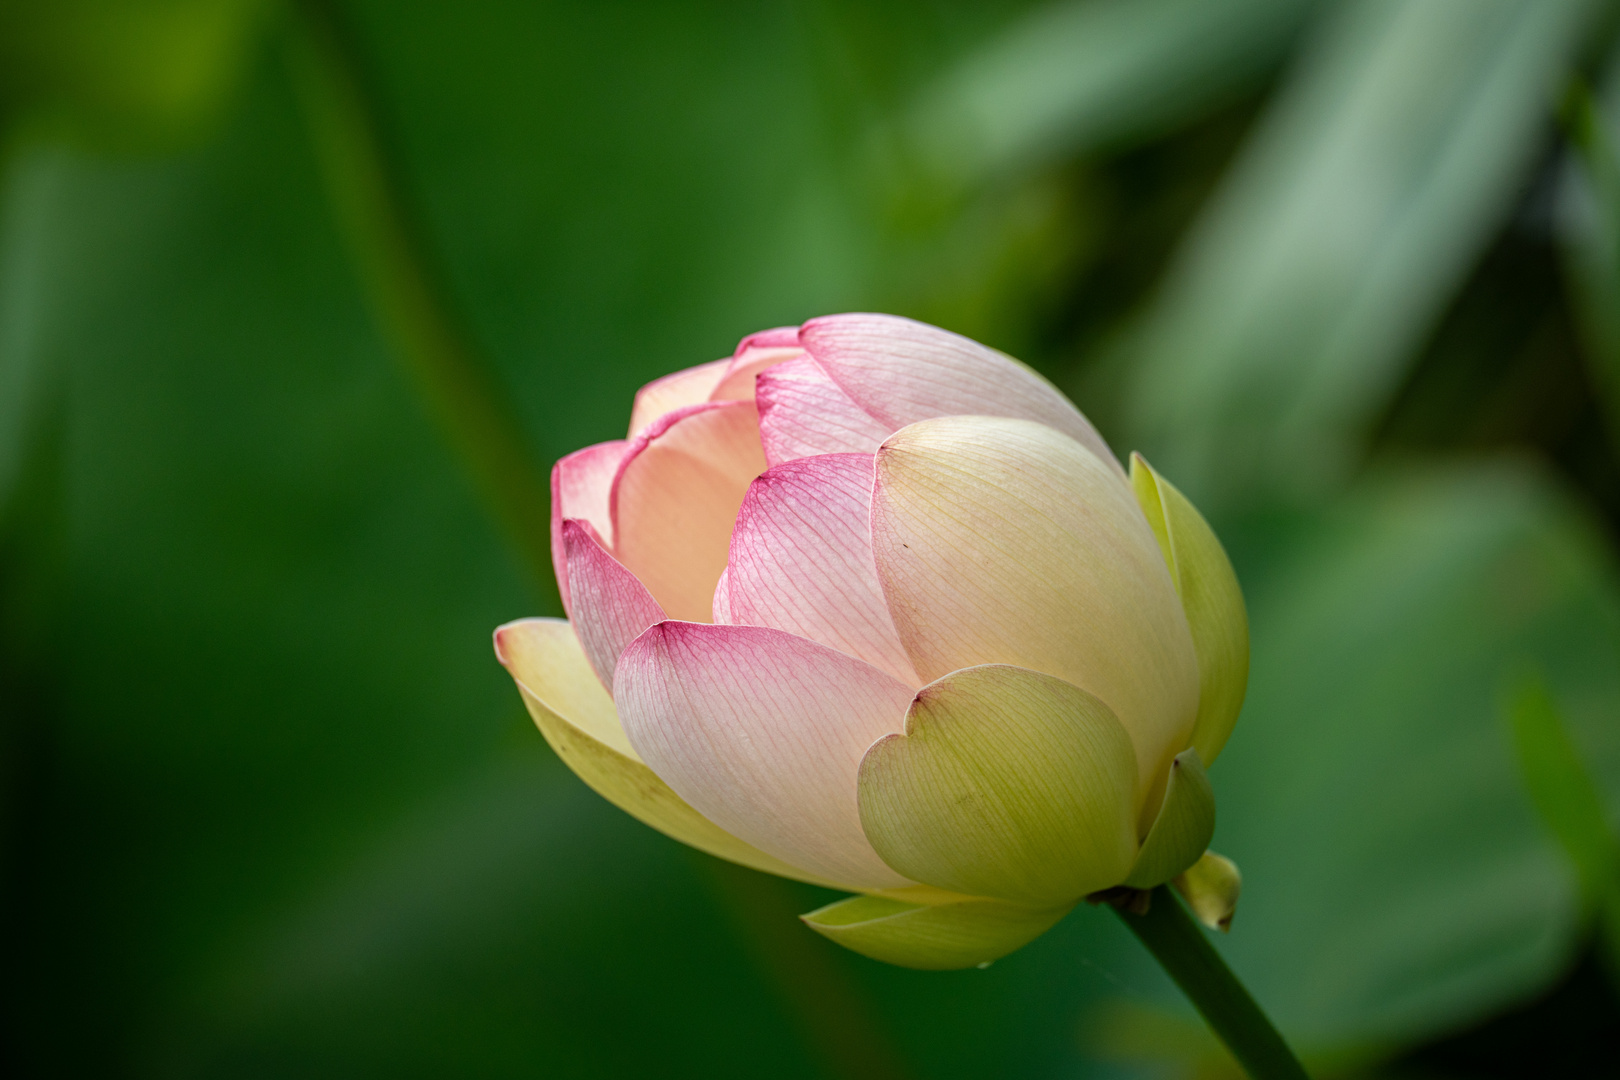 Lotusblüte kurz vor dem Aufblühen